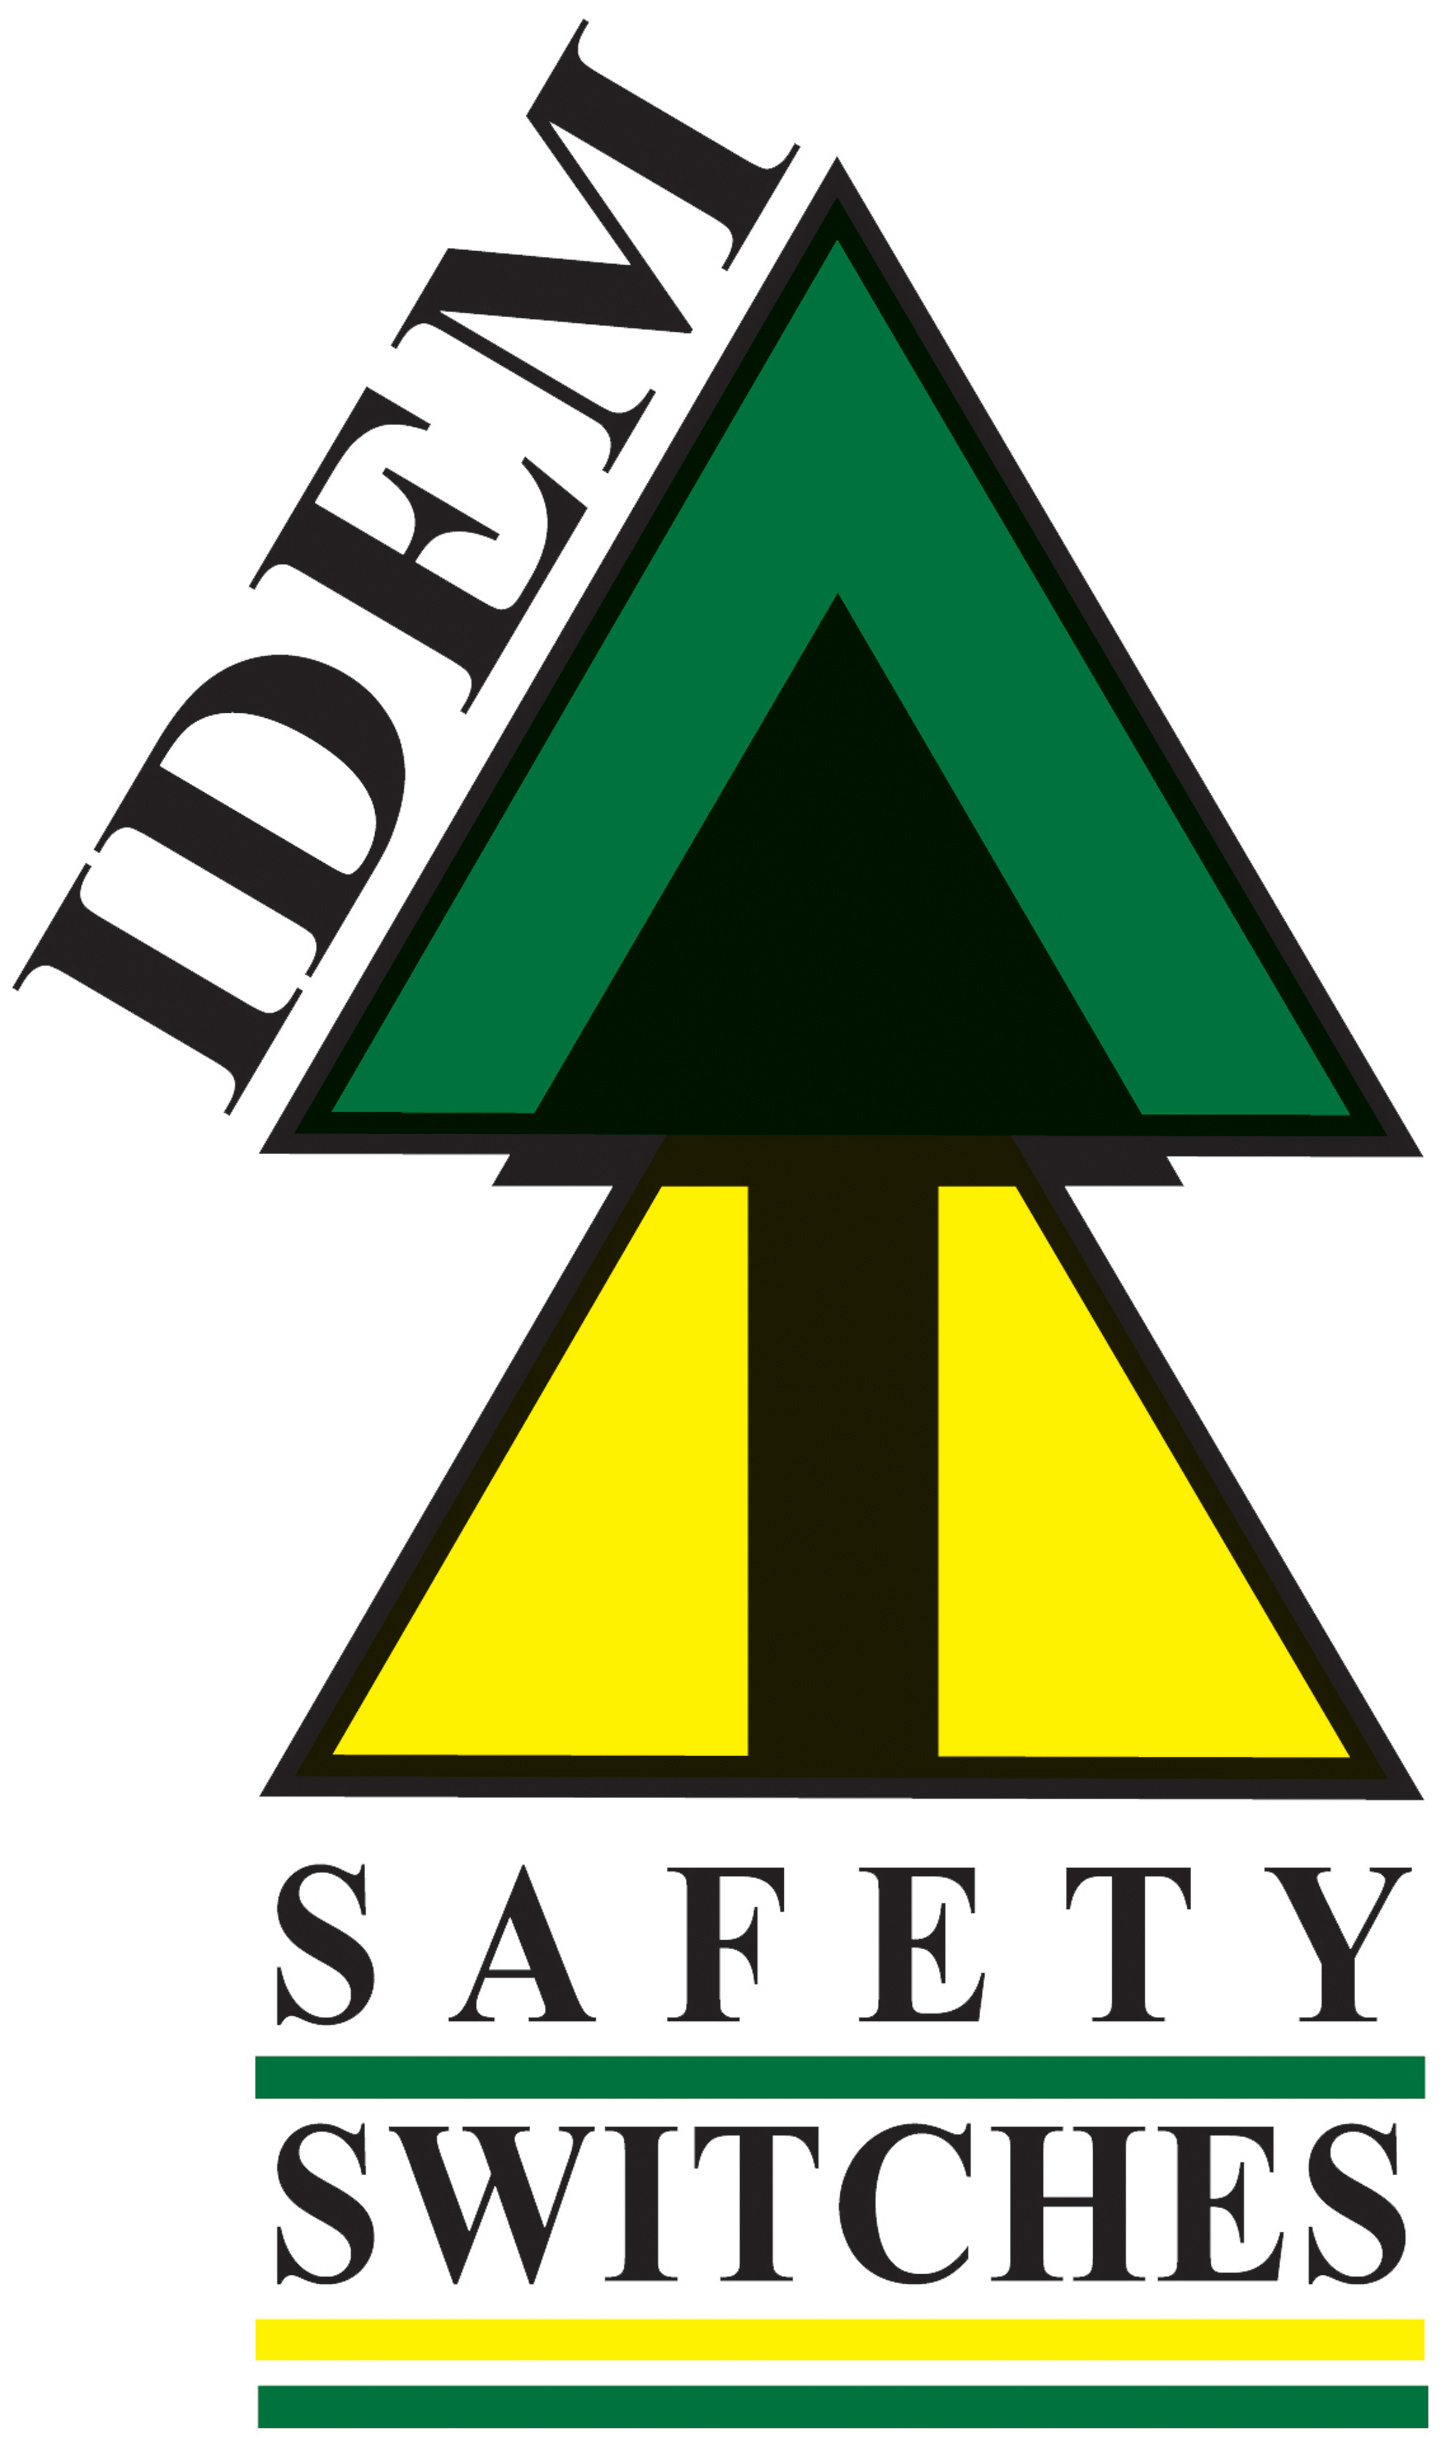 IDEM Safety Switches